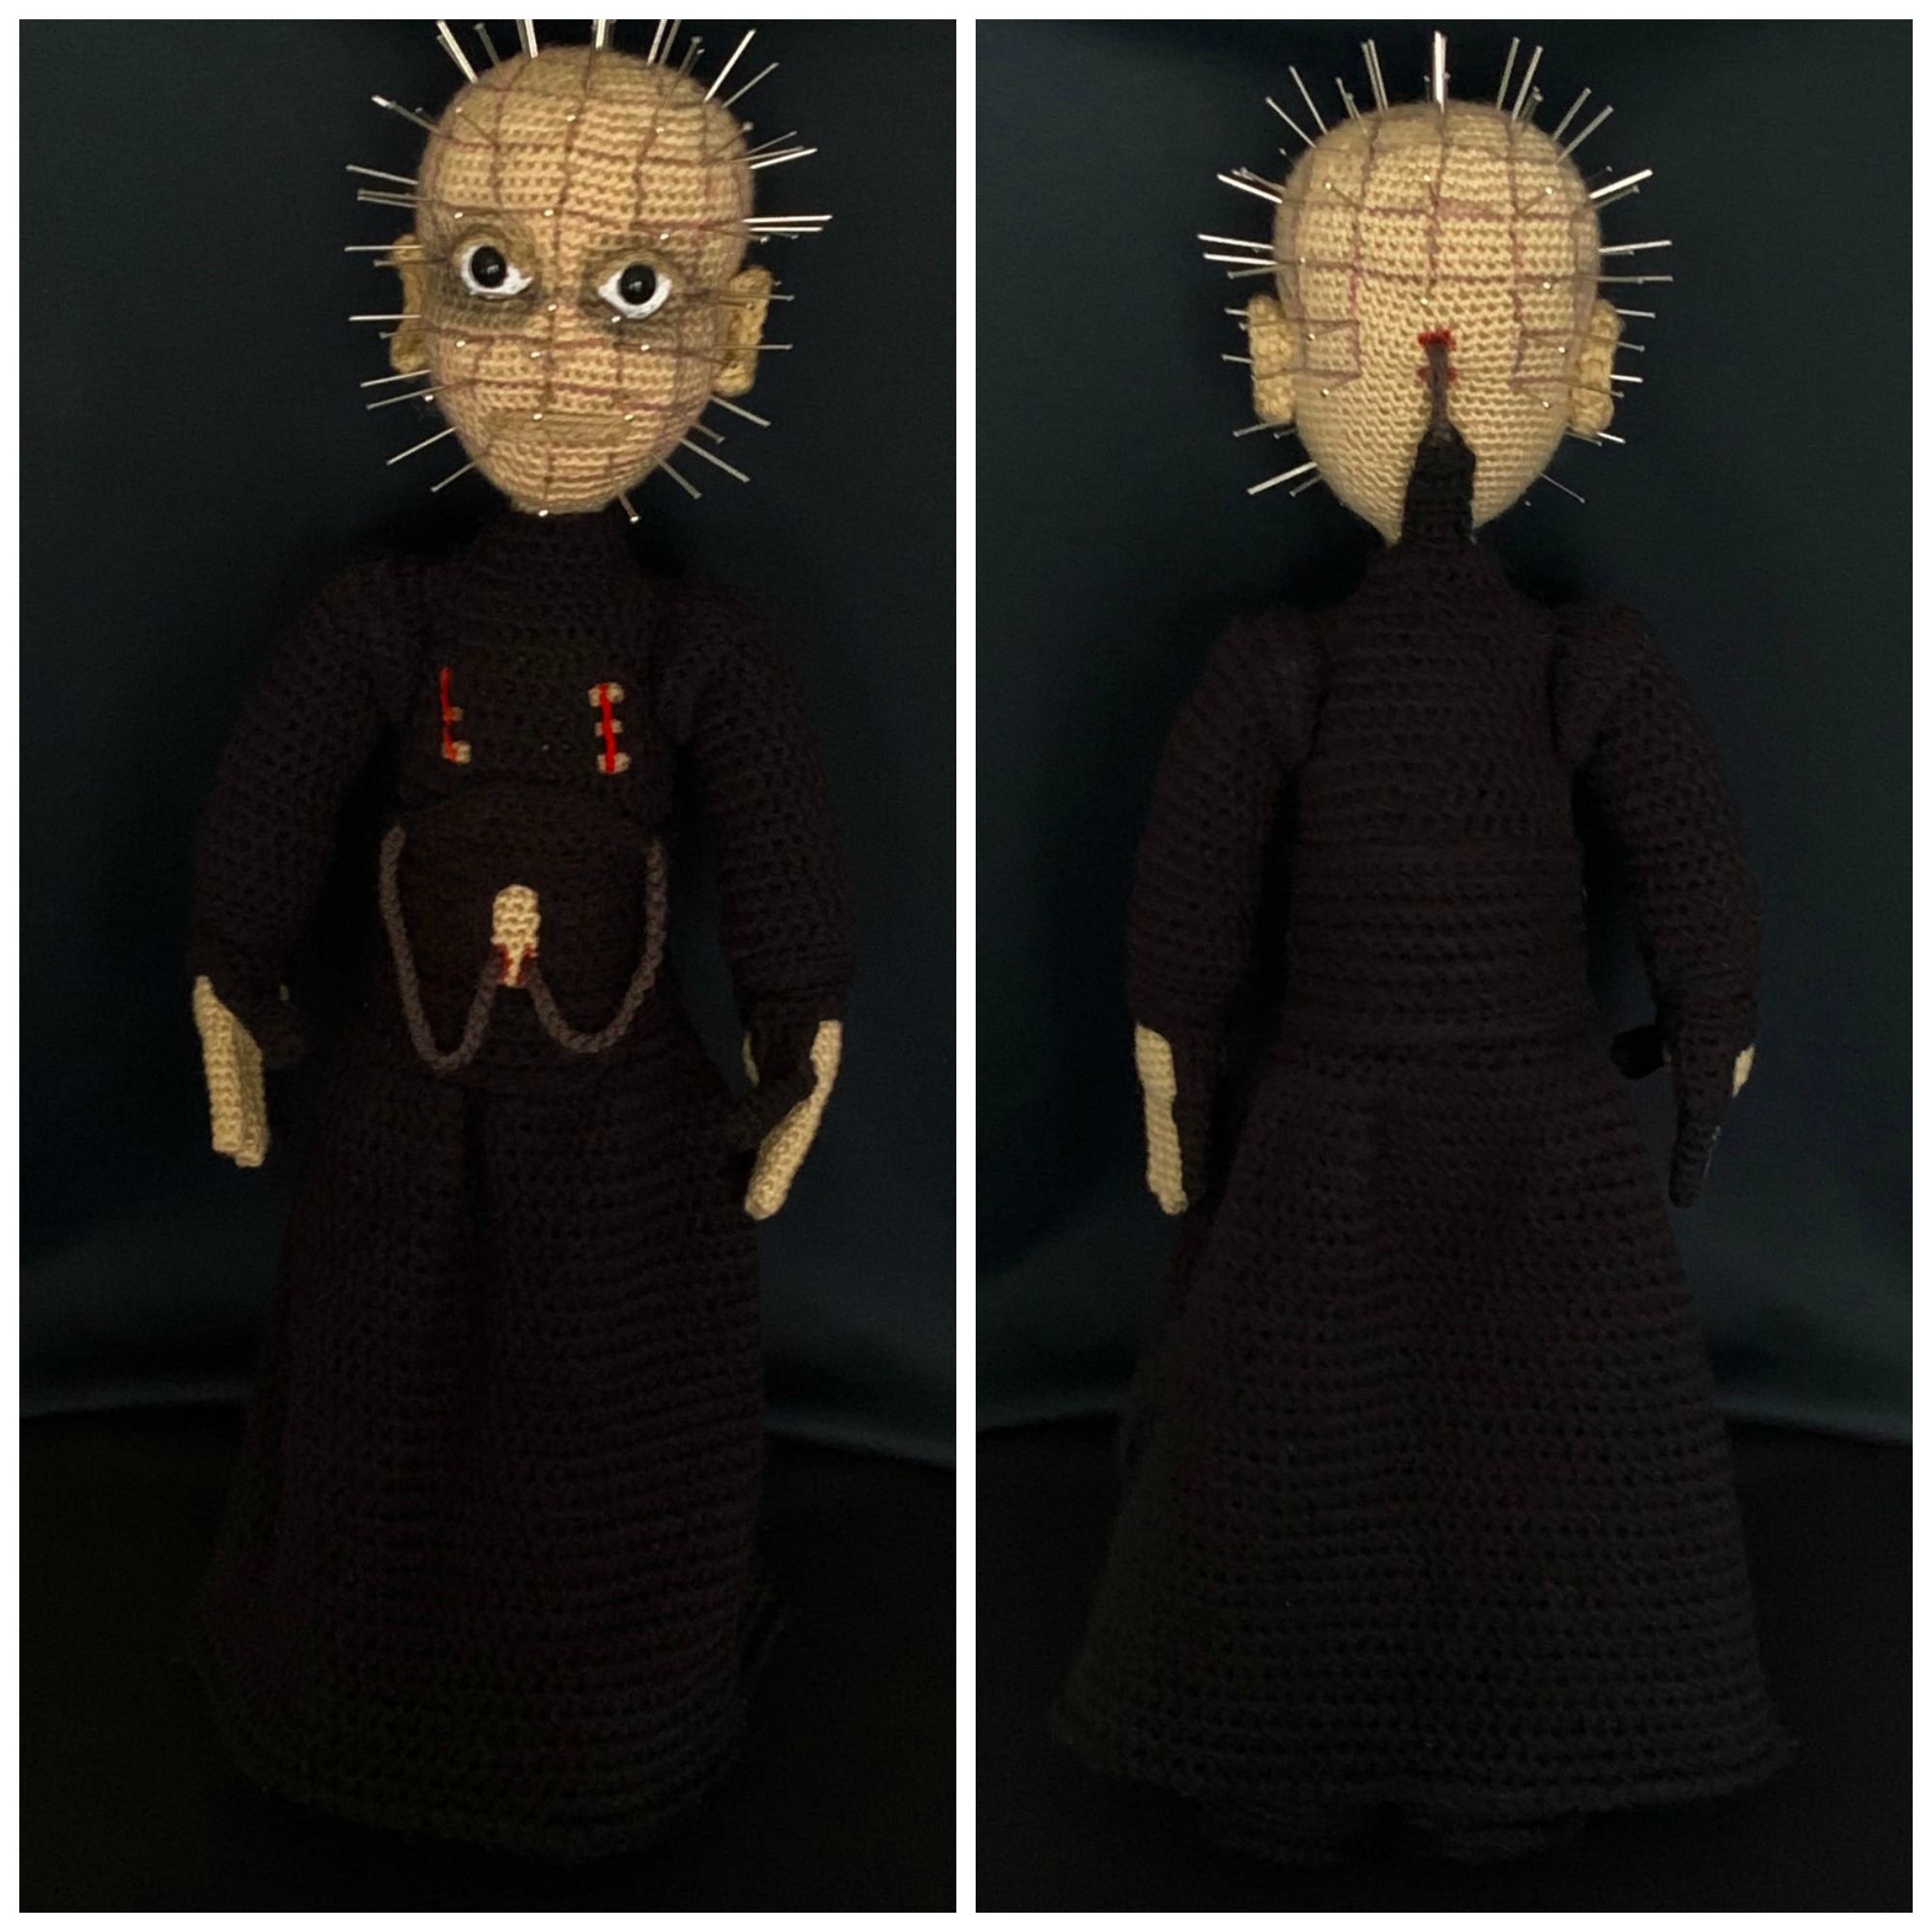 Crochet Amigurumi Doll Inspired By Pinhead From Hellraiser ... Pattern Designed By After Dark Crochet